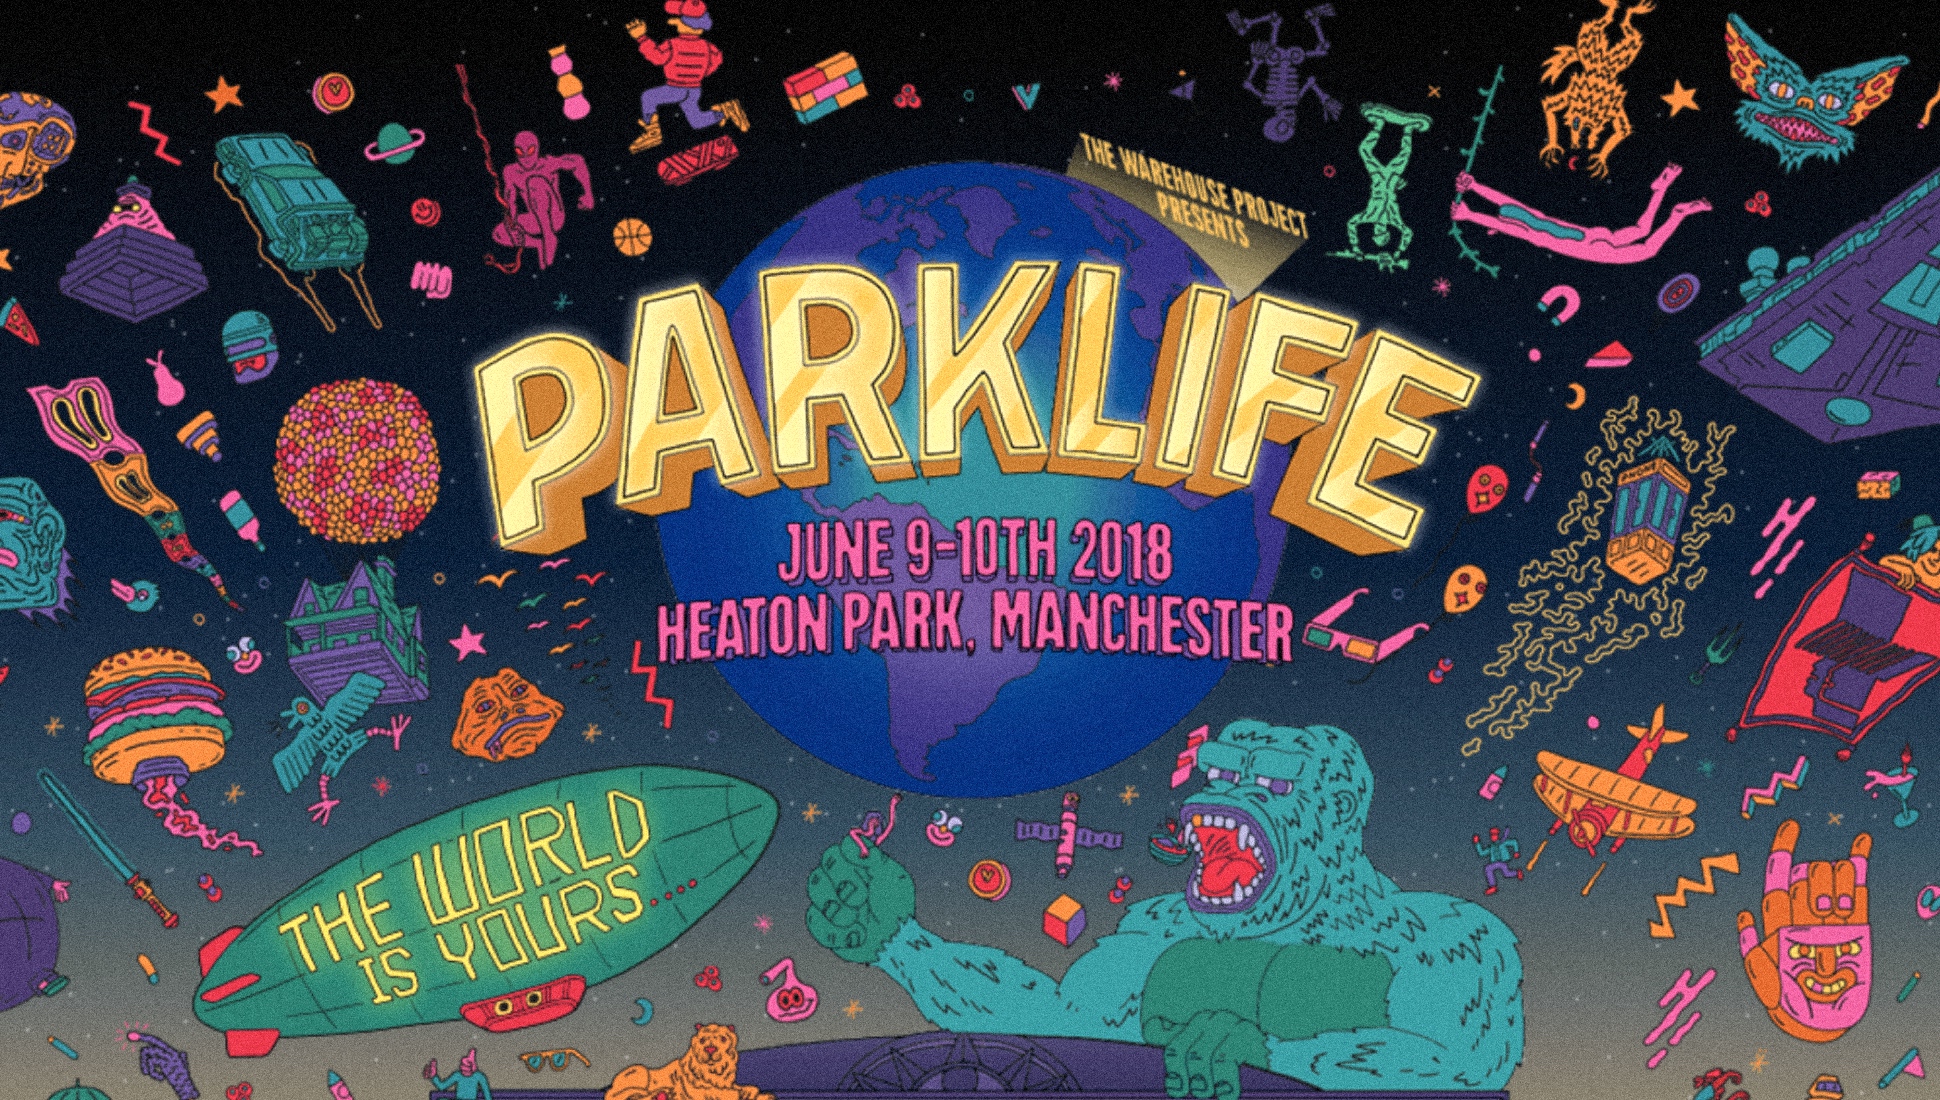 parklife album cover